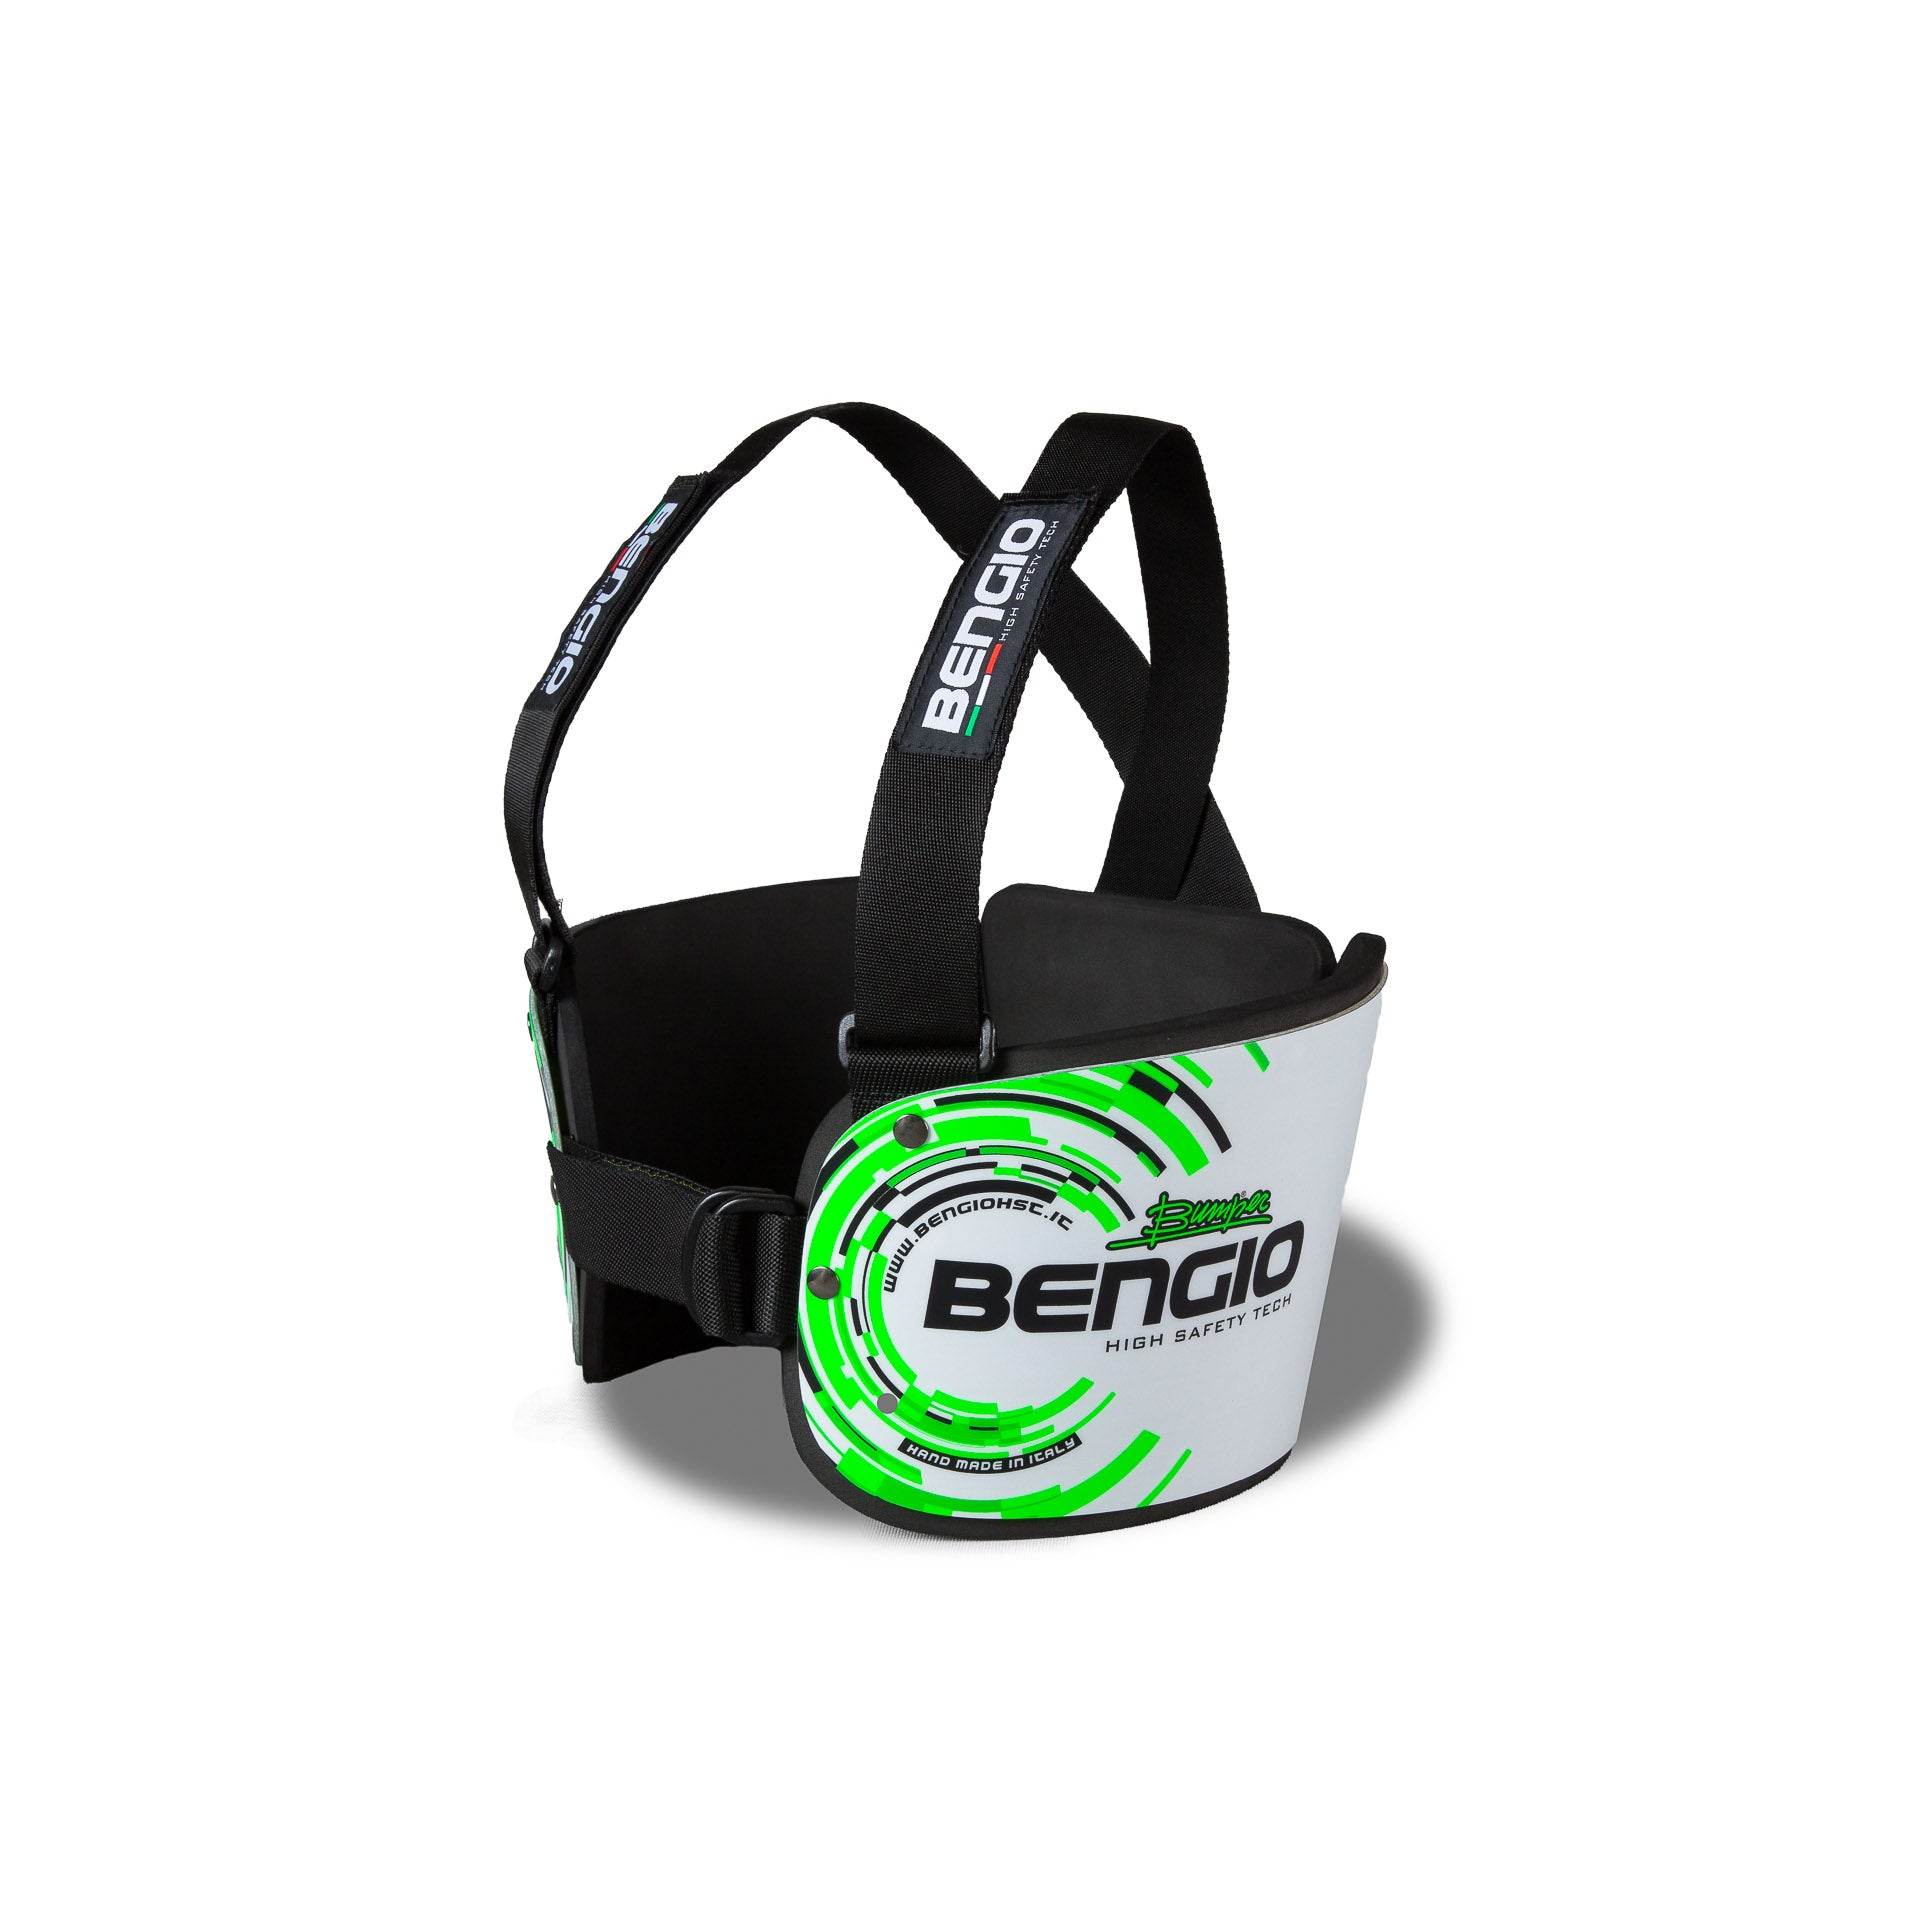 BENGIO STDXLWG BUMPER Standard Захист ребер для картингу, білий/зелений, розмір XL Photo-1 